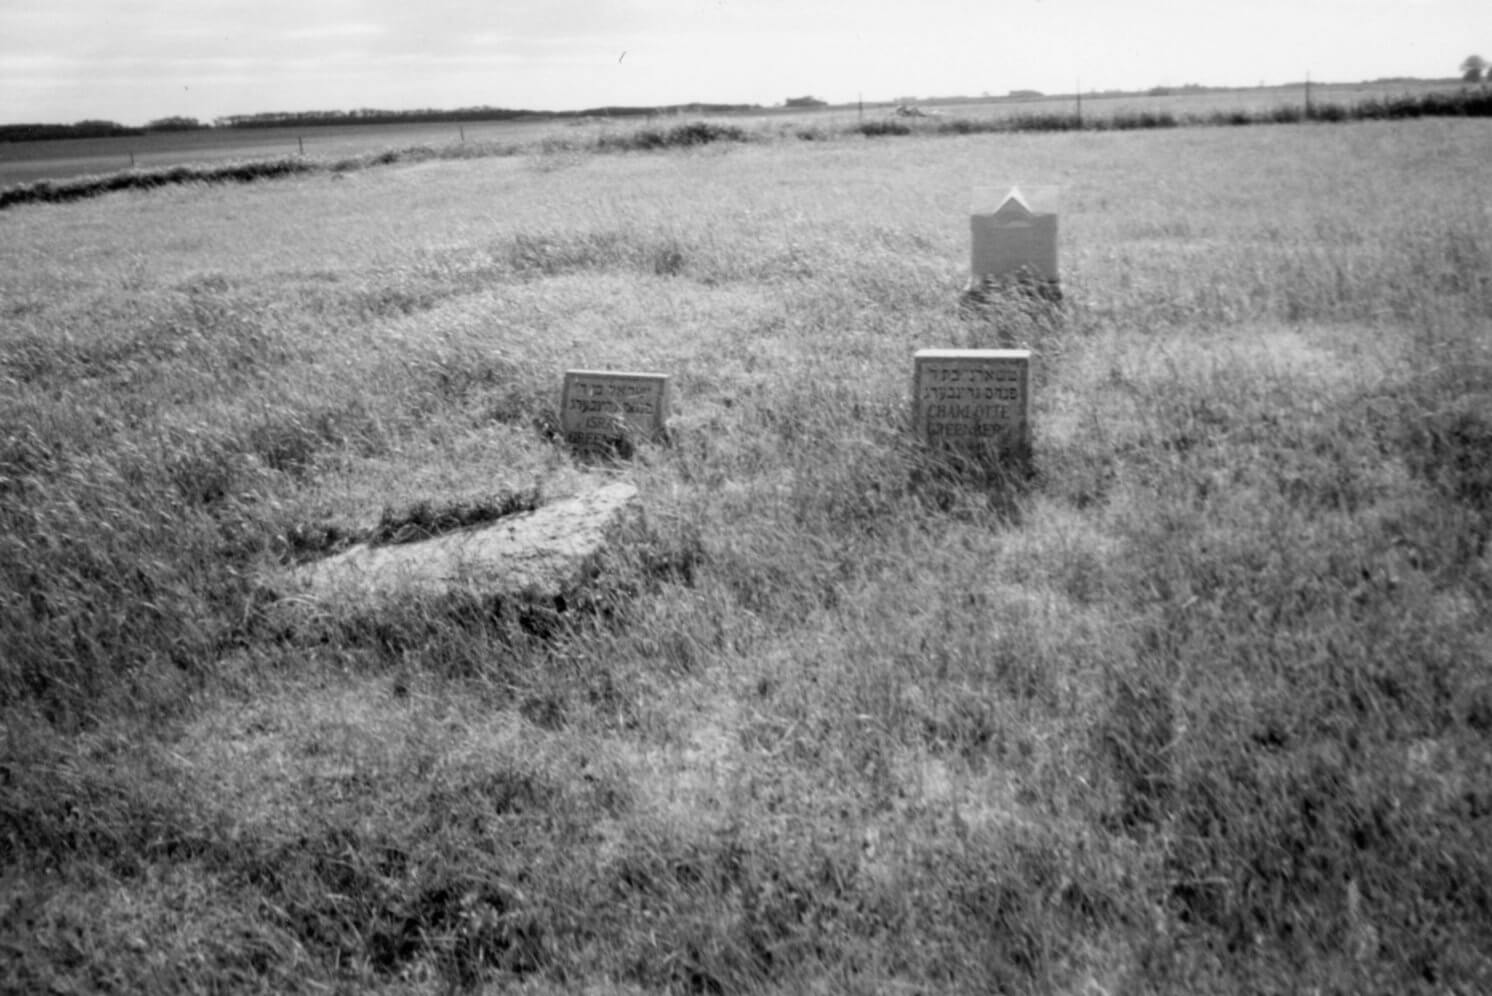 Jewish headstones in an abandoned graveyard in North Dakota.